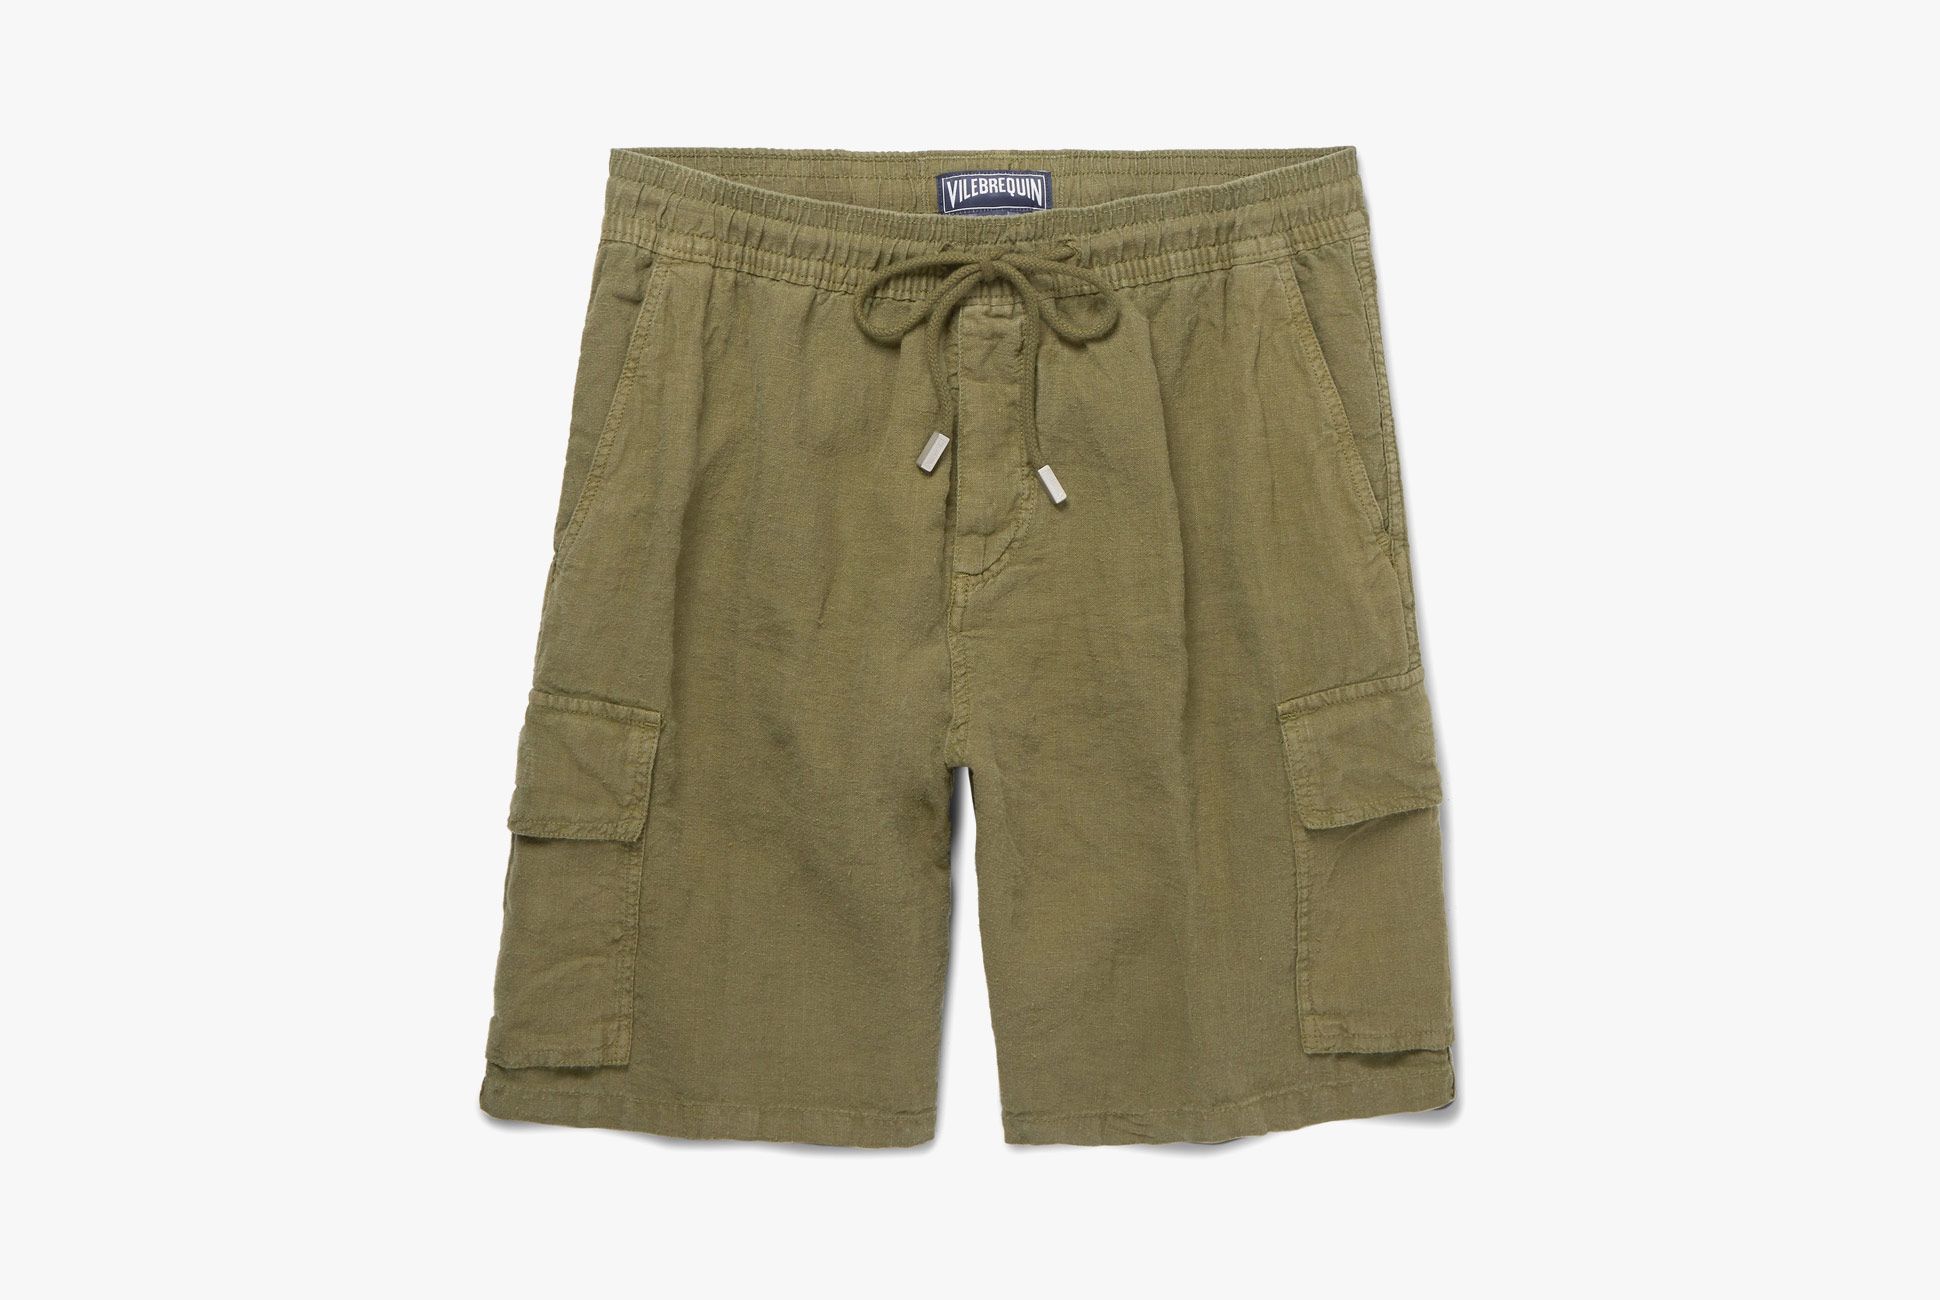 The Best Linen Shorts for Men - Gear Patrol